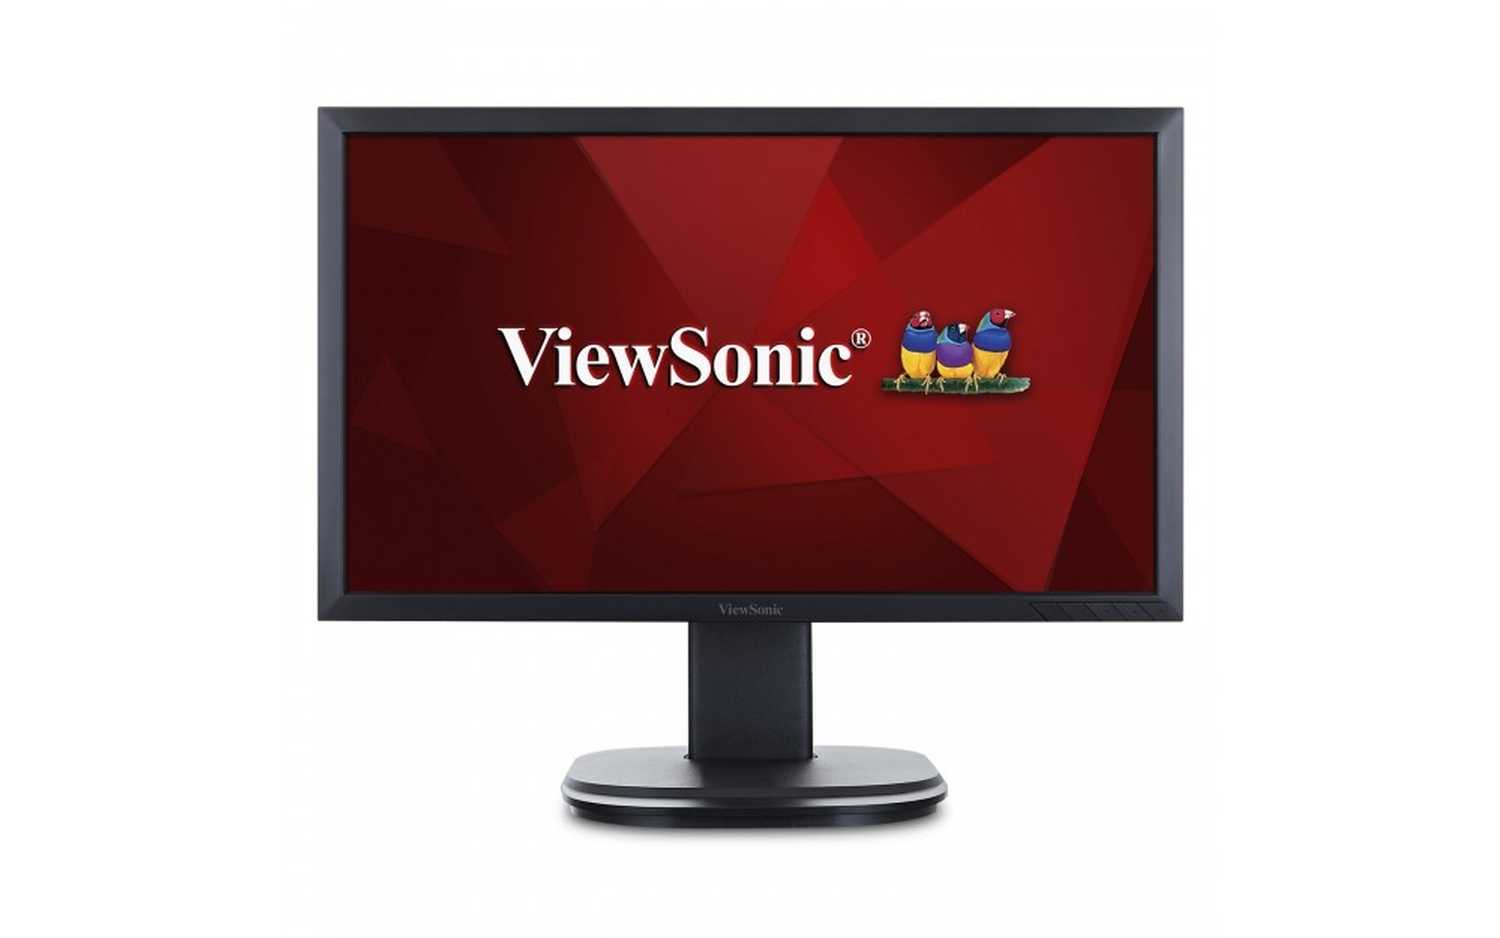 Viewsonic vp2365-led (черный)